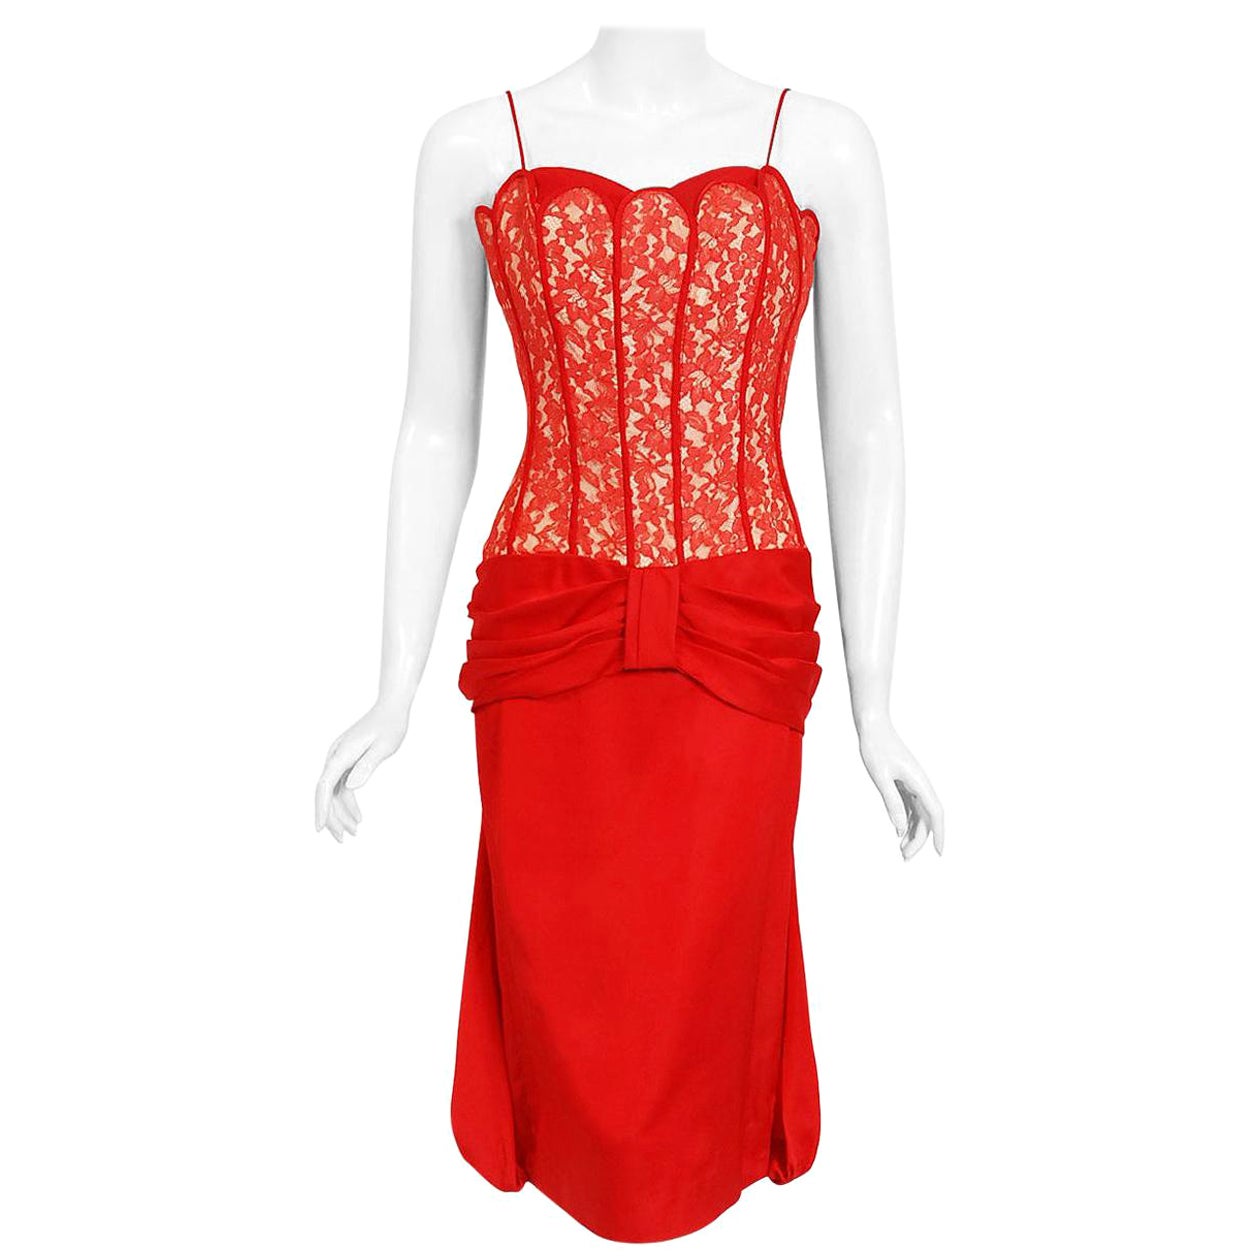 Vintage 1950s Lilli Diamond Red Silk Lace Illusion Draped Hourglass Pin-Up Dress